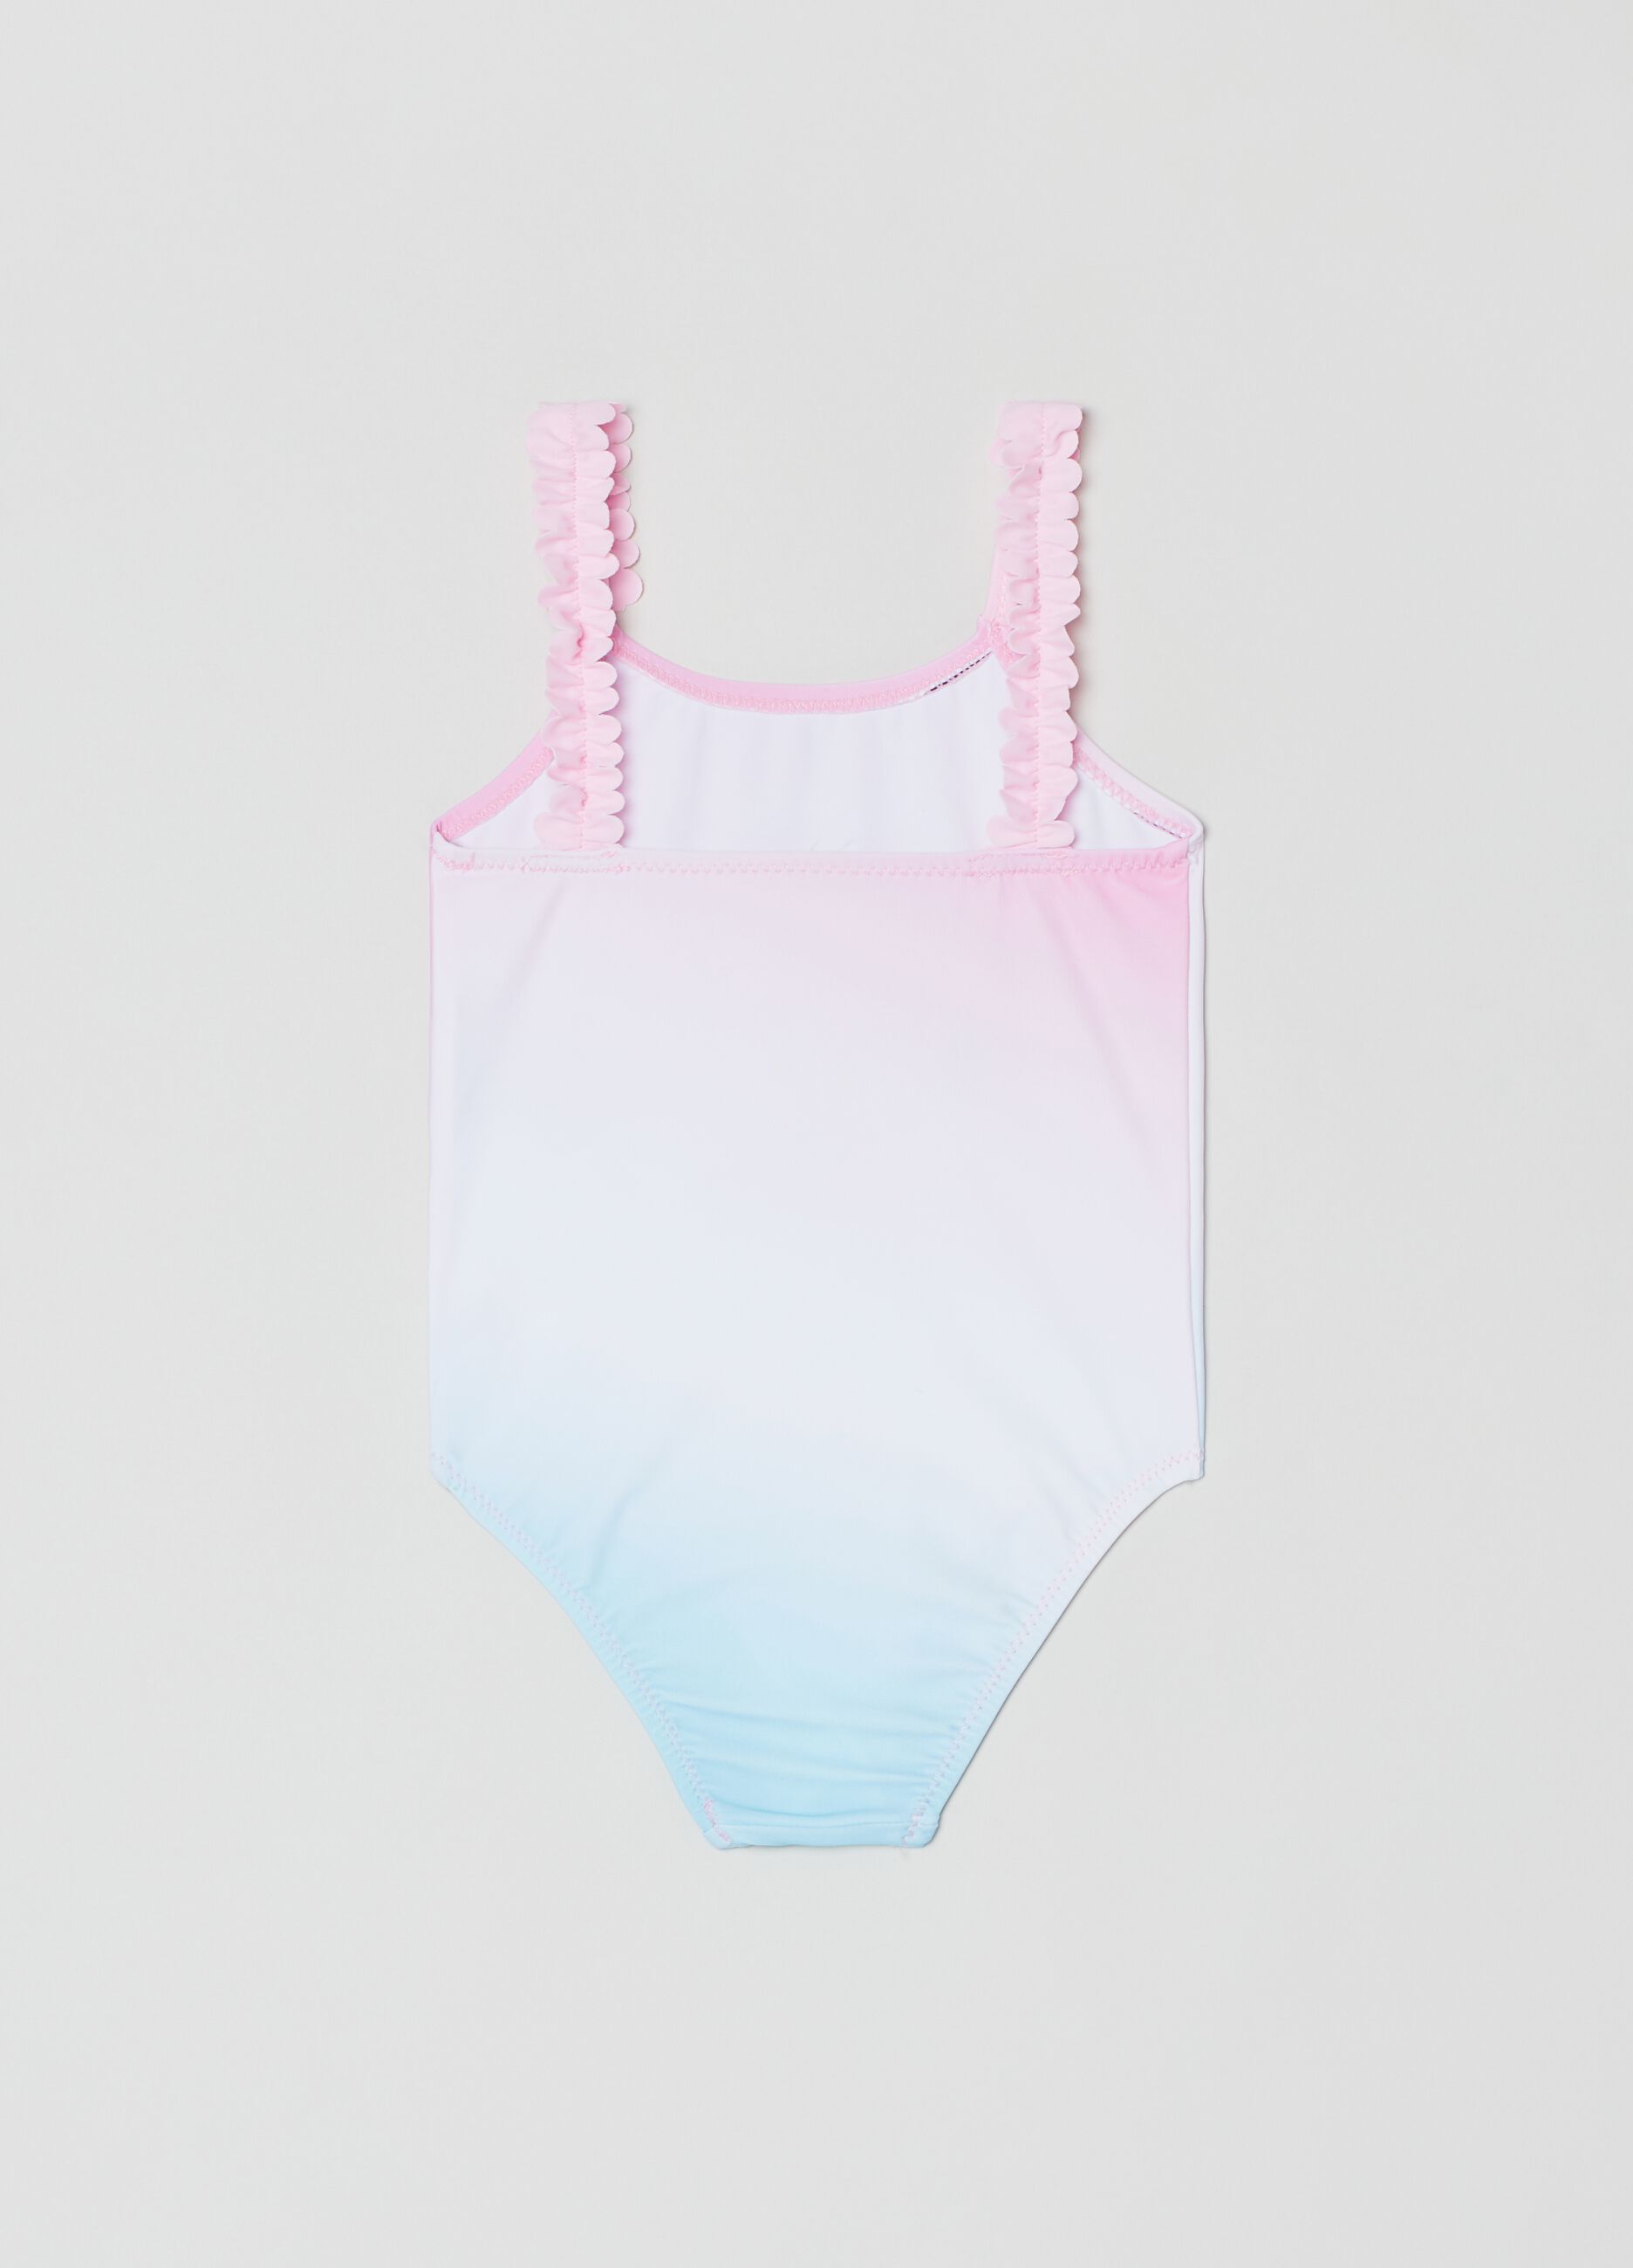 One-piece swimsuit with Tweetie Pie print